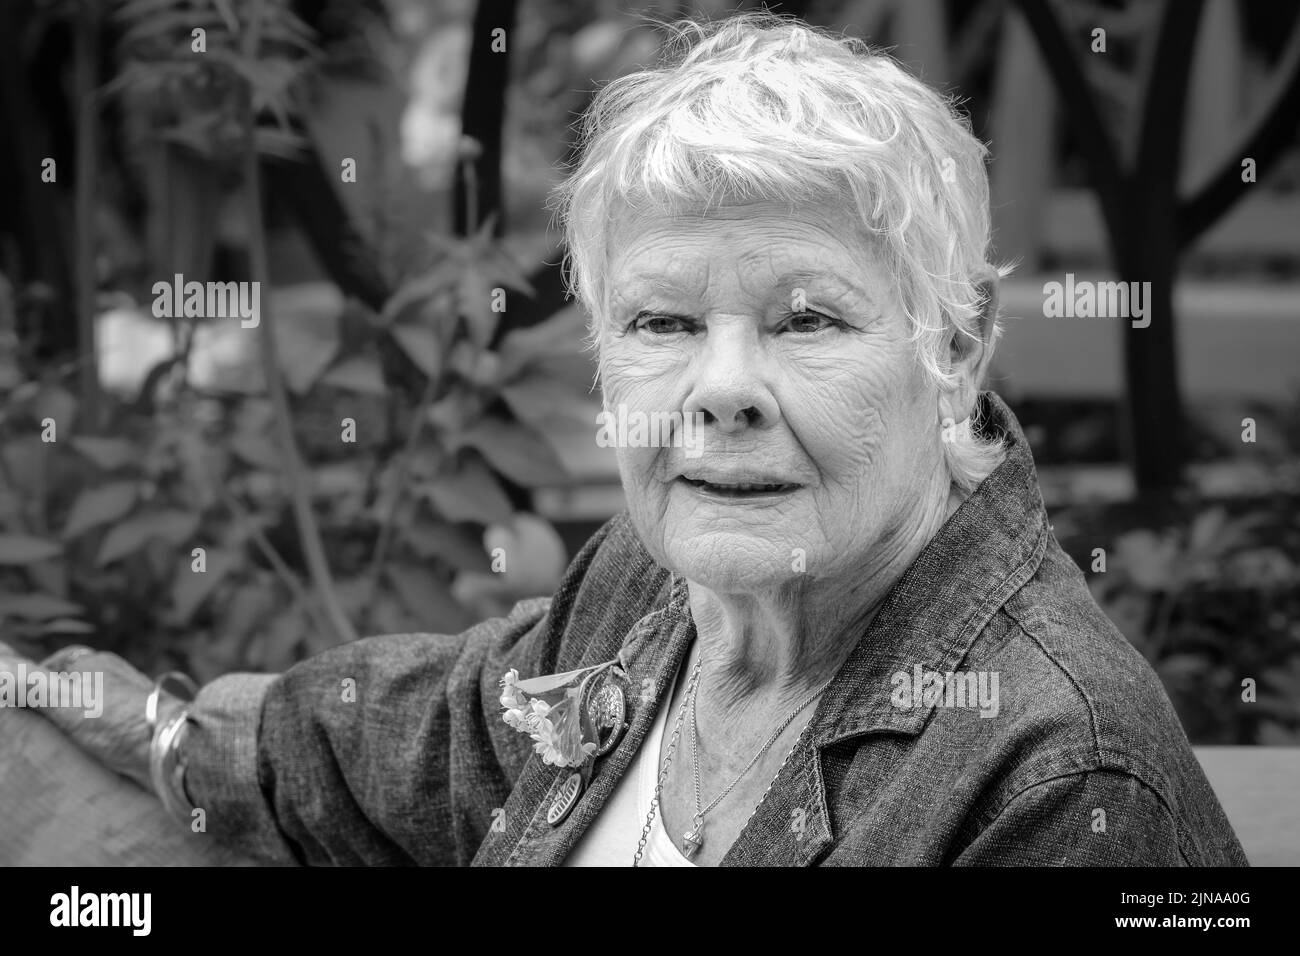 Dame Judi Dench, photocall du Chelsea Flower Show, gros plan, monochrome, Londres, Angleterre Banque D'Images